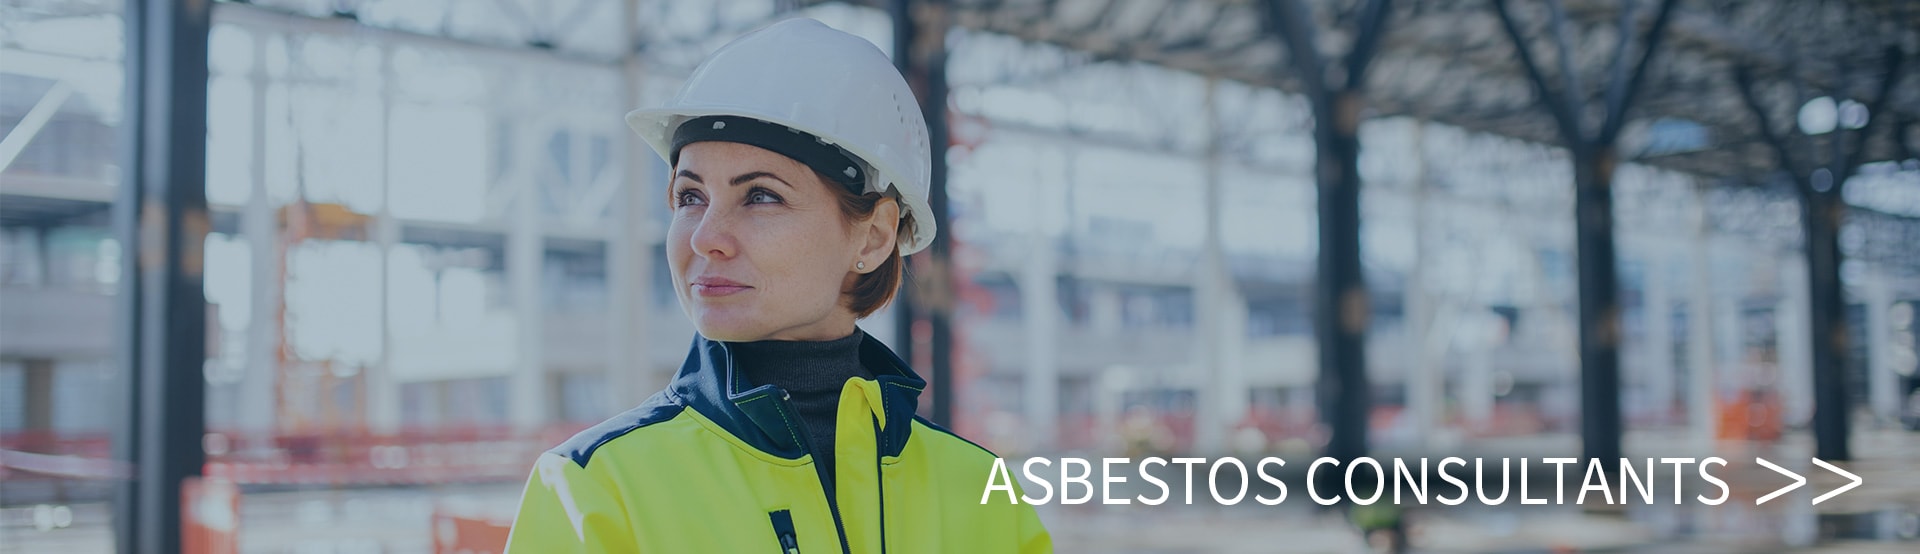 Asbestos Consultants, Asbestos Removal Training Courses 